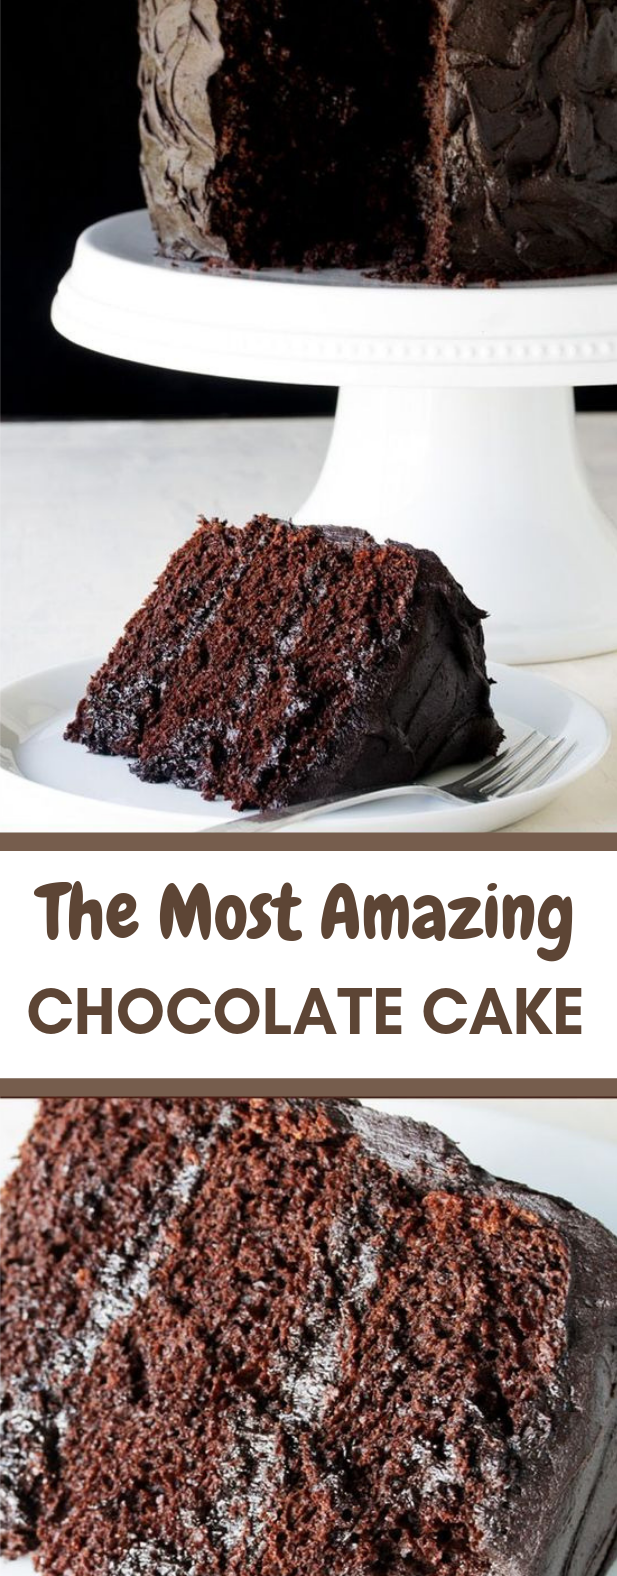 THE MOST AMAZING CHOCOLATE CAKE RECIPE #dessert #delicious